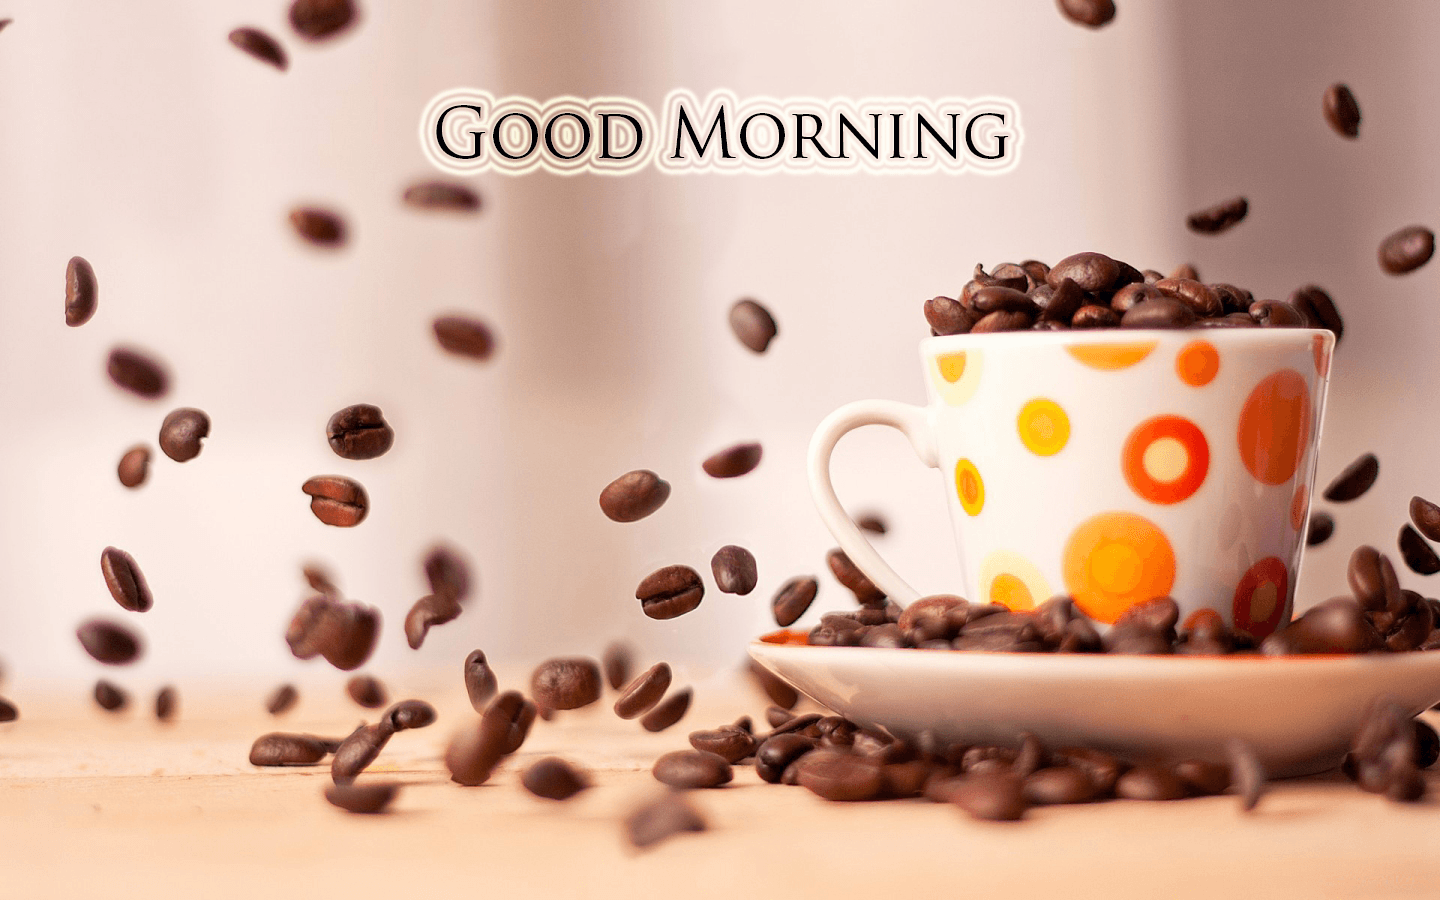 Good Morning Wallpaper HD Download Free 1080p. Good morning coffee cup, Good morning coffee, Morning coffee image